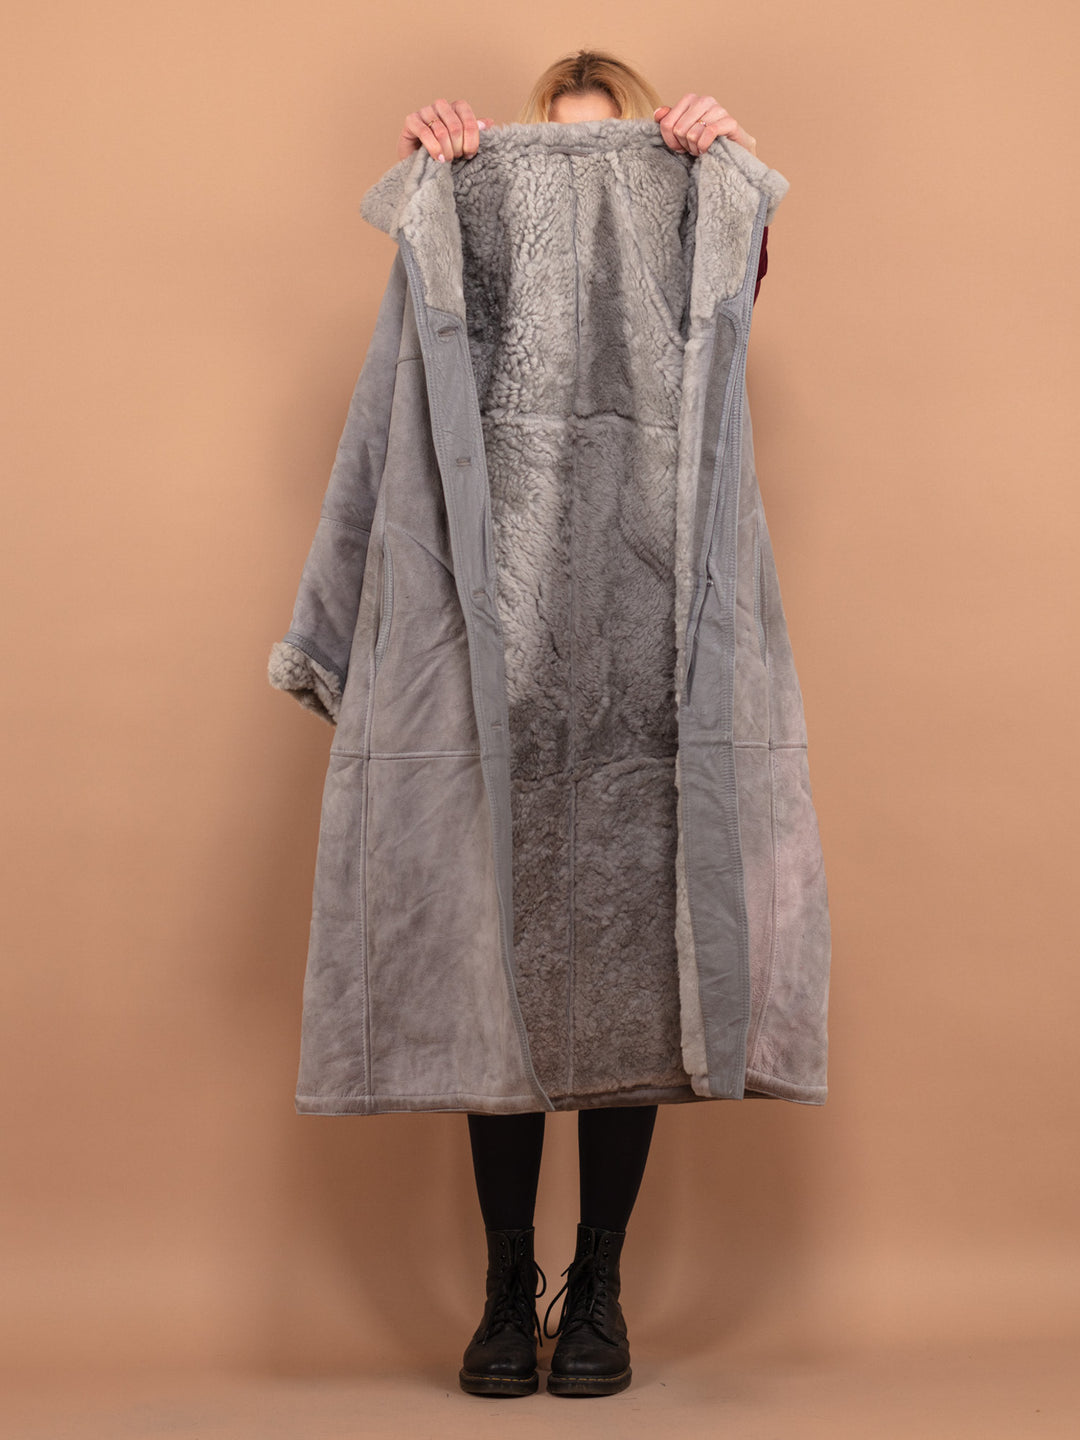 Sheepskin Long Coat, Size S Shearling Coat, Gray Sheepskin Overcoat, Women Sheepskin Coat, Penny Lane, Retro Leather Suede Coat